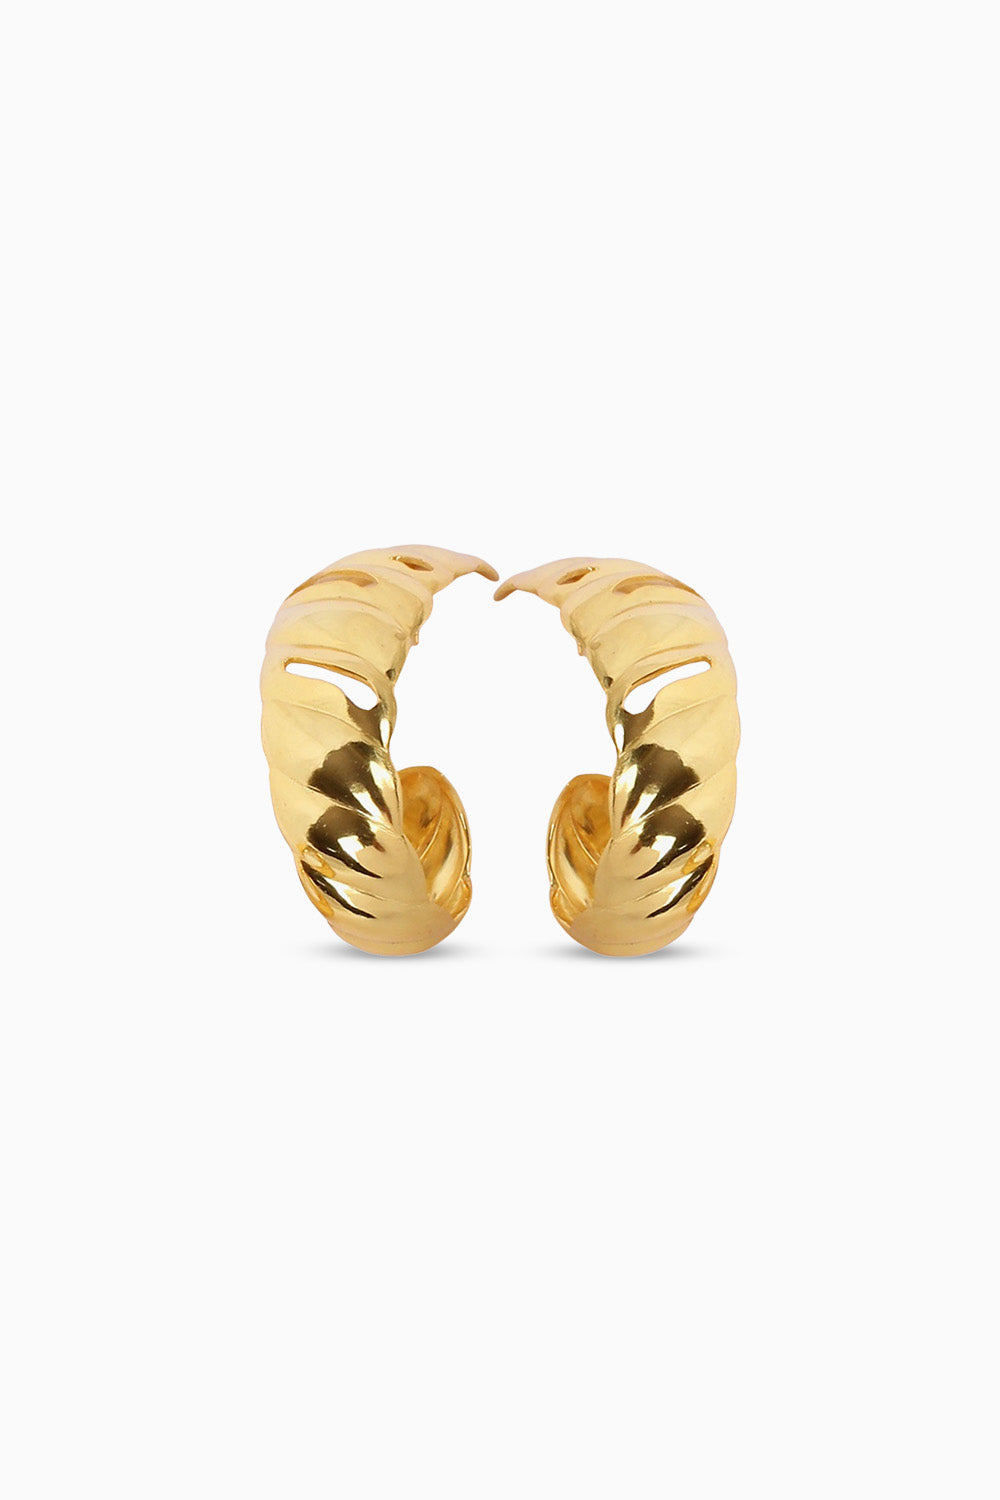 Aqua Swirl Earrings Gold Tone